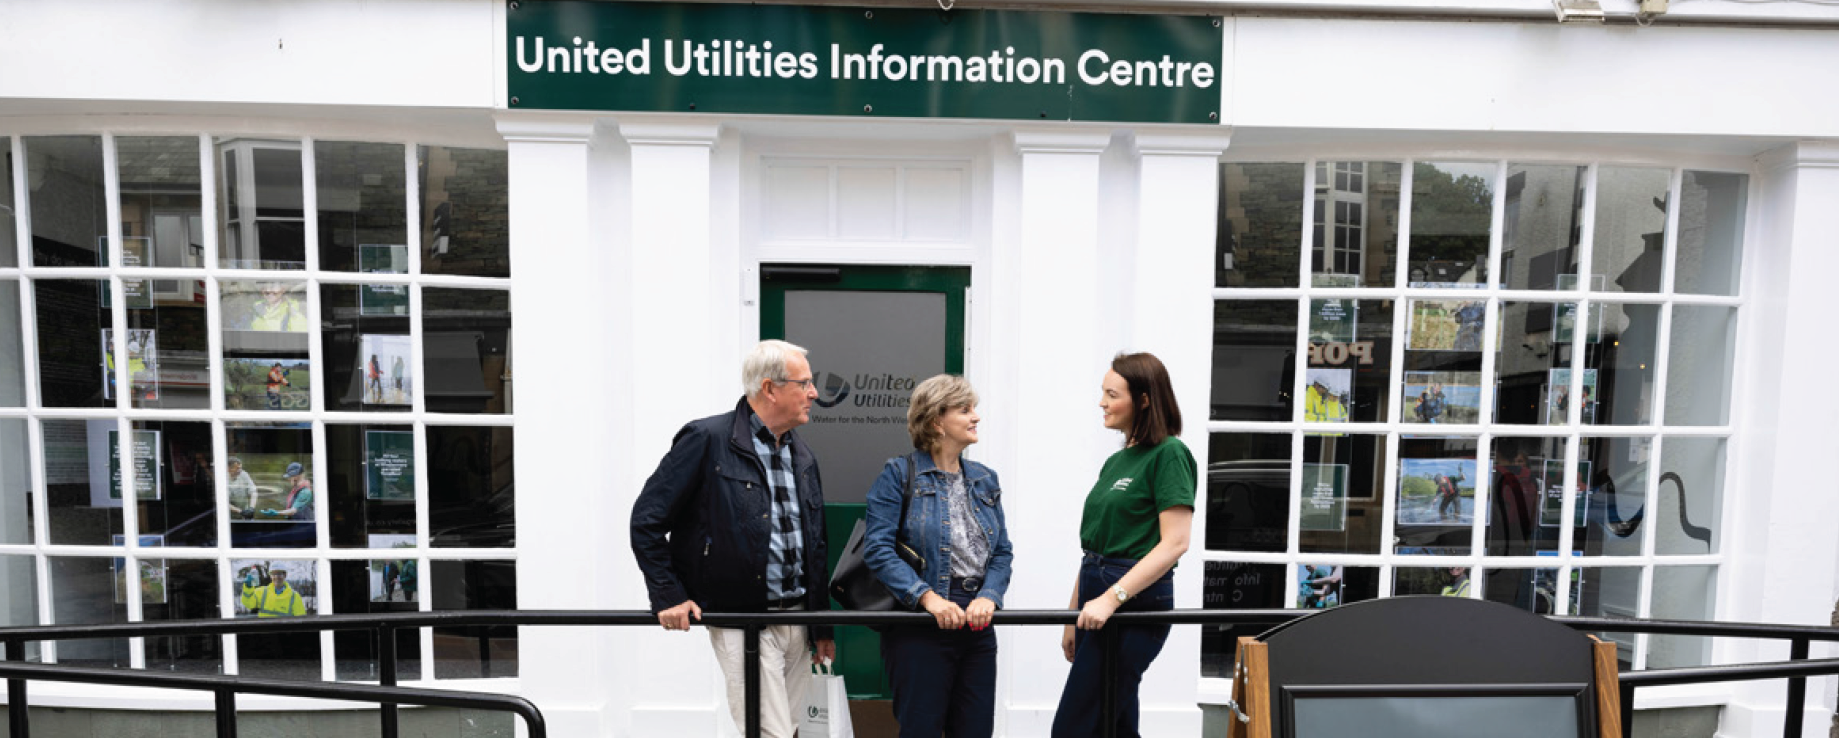 United Utilities Information Centre